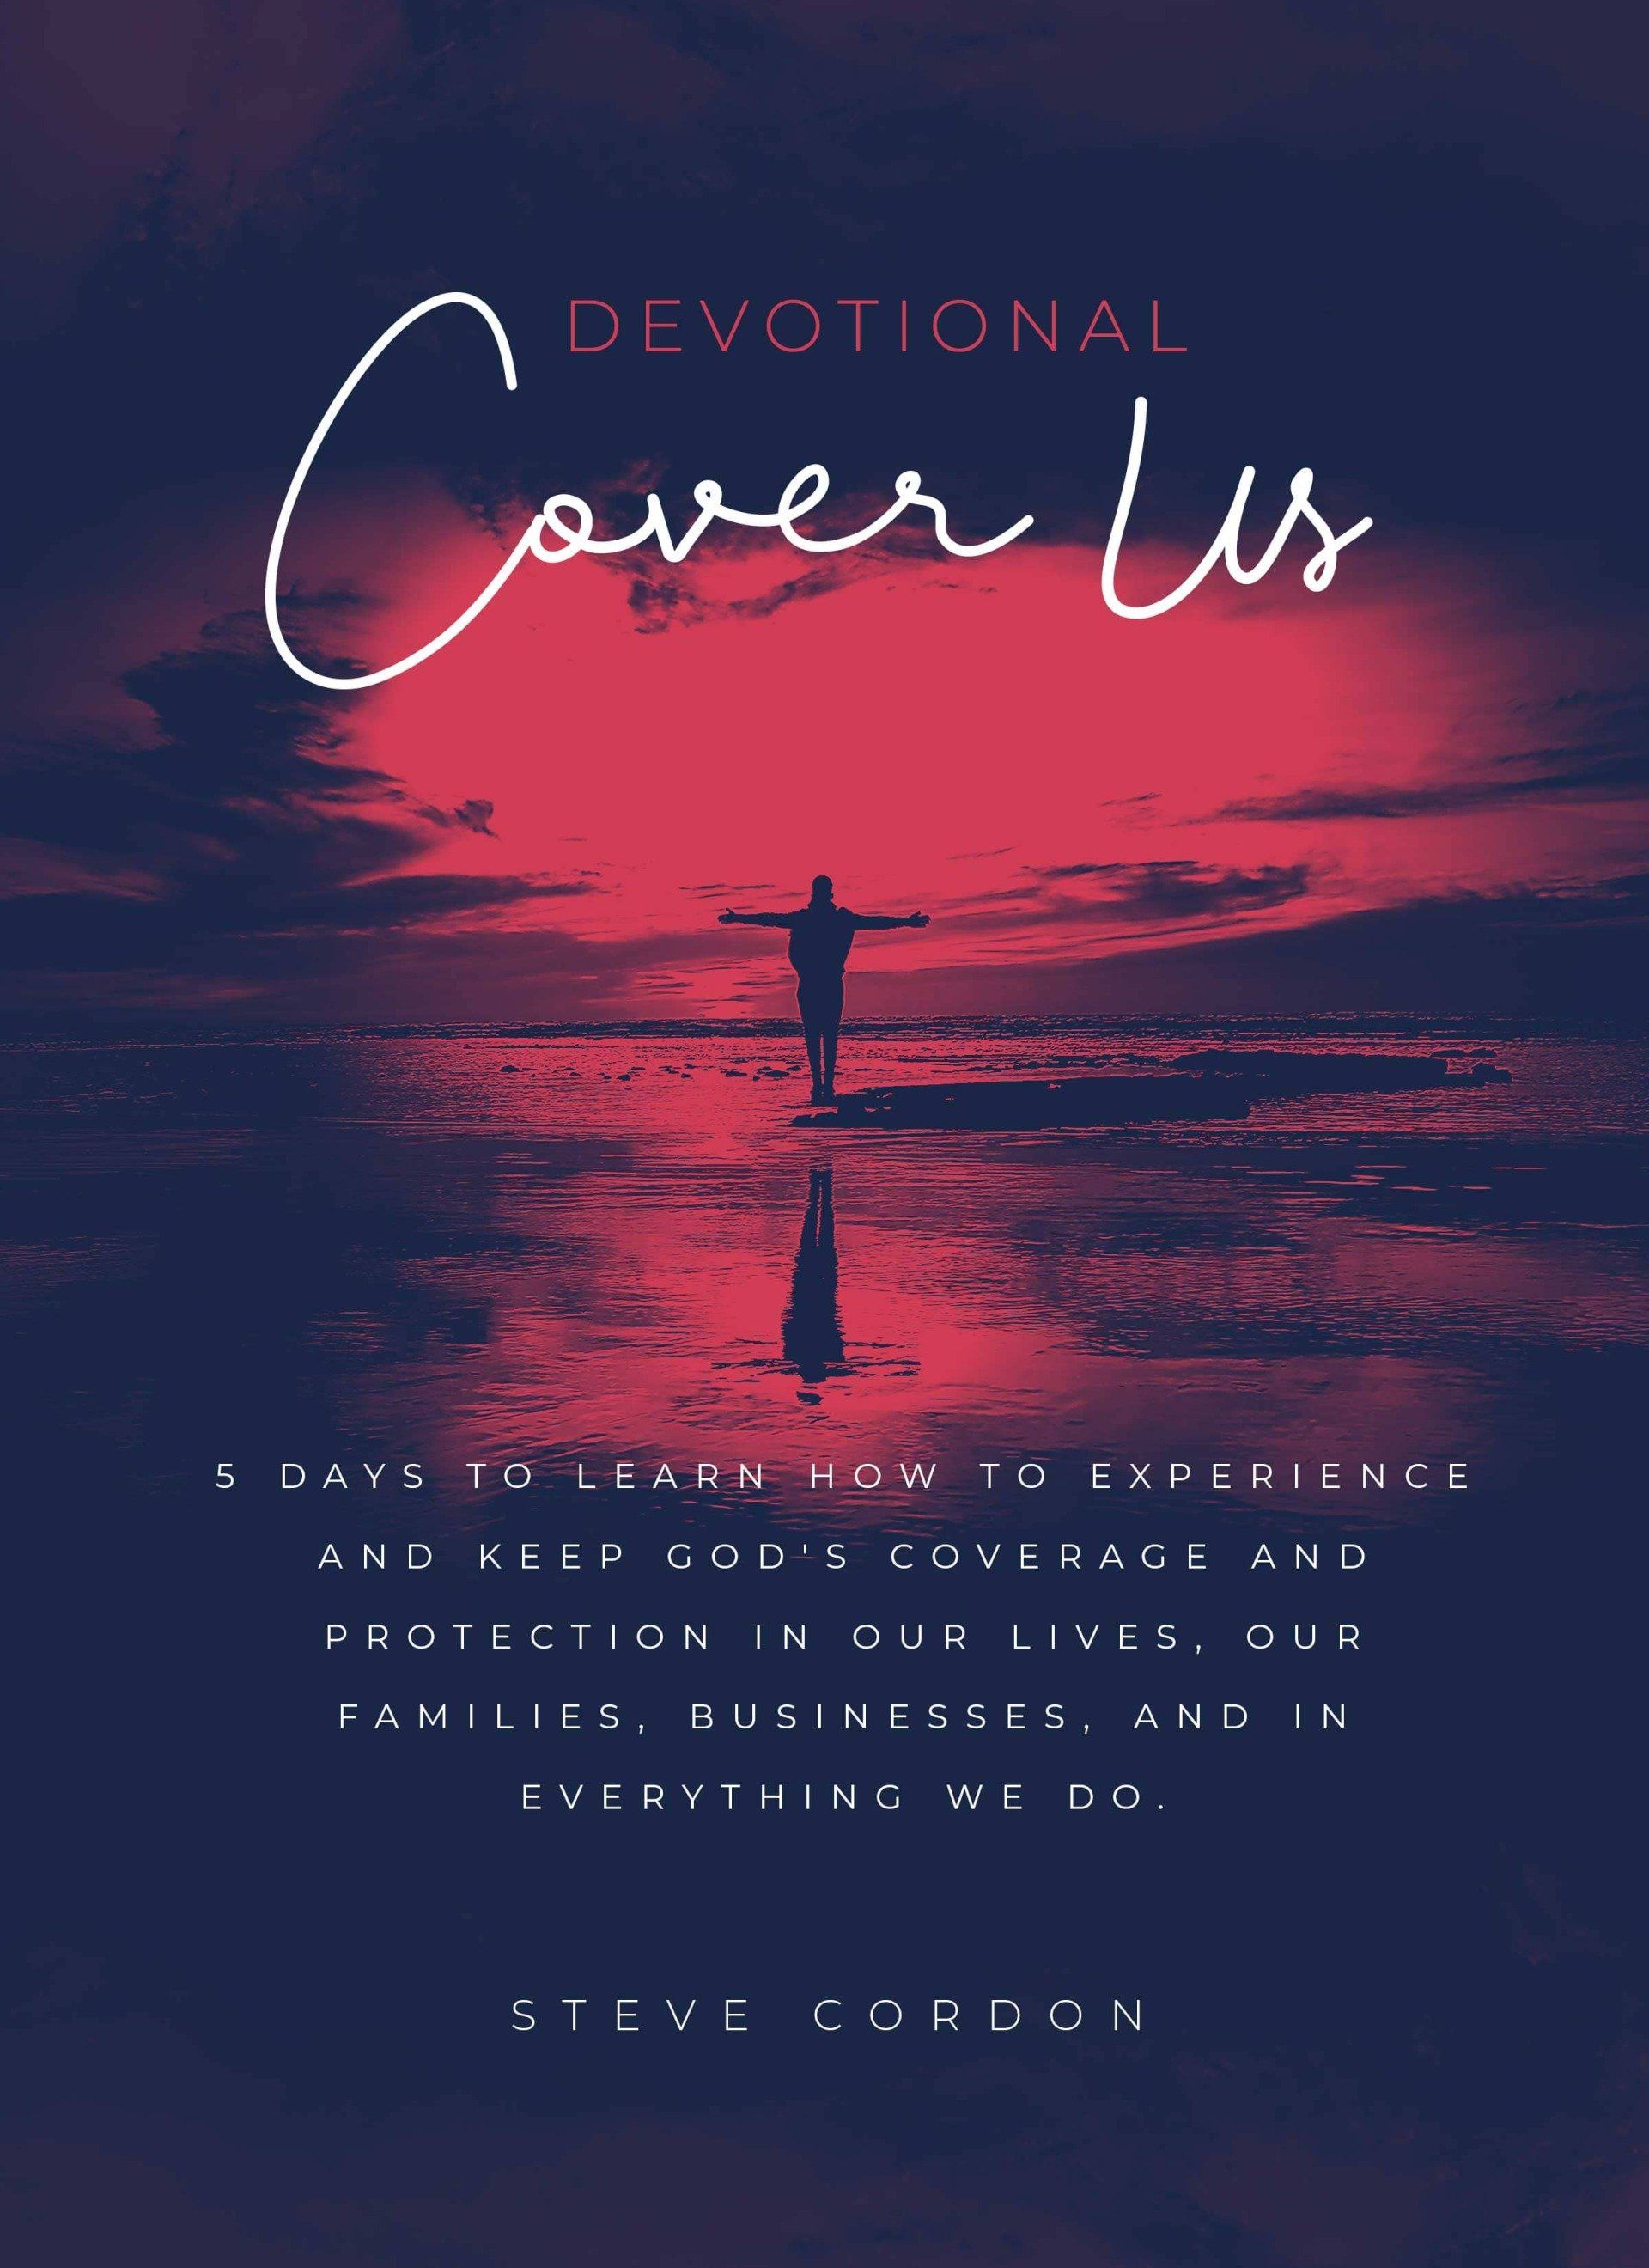 Devotional COVER US